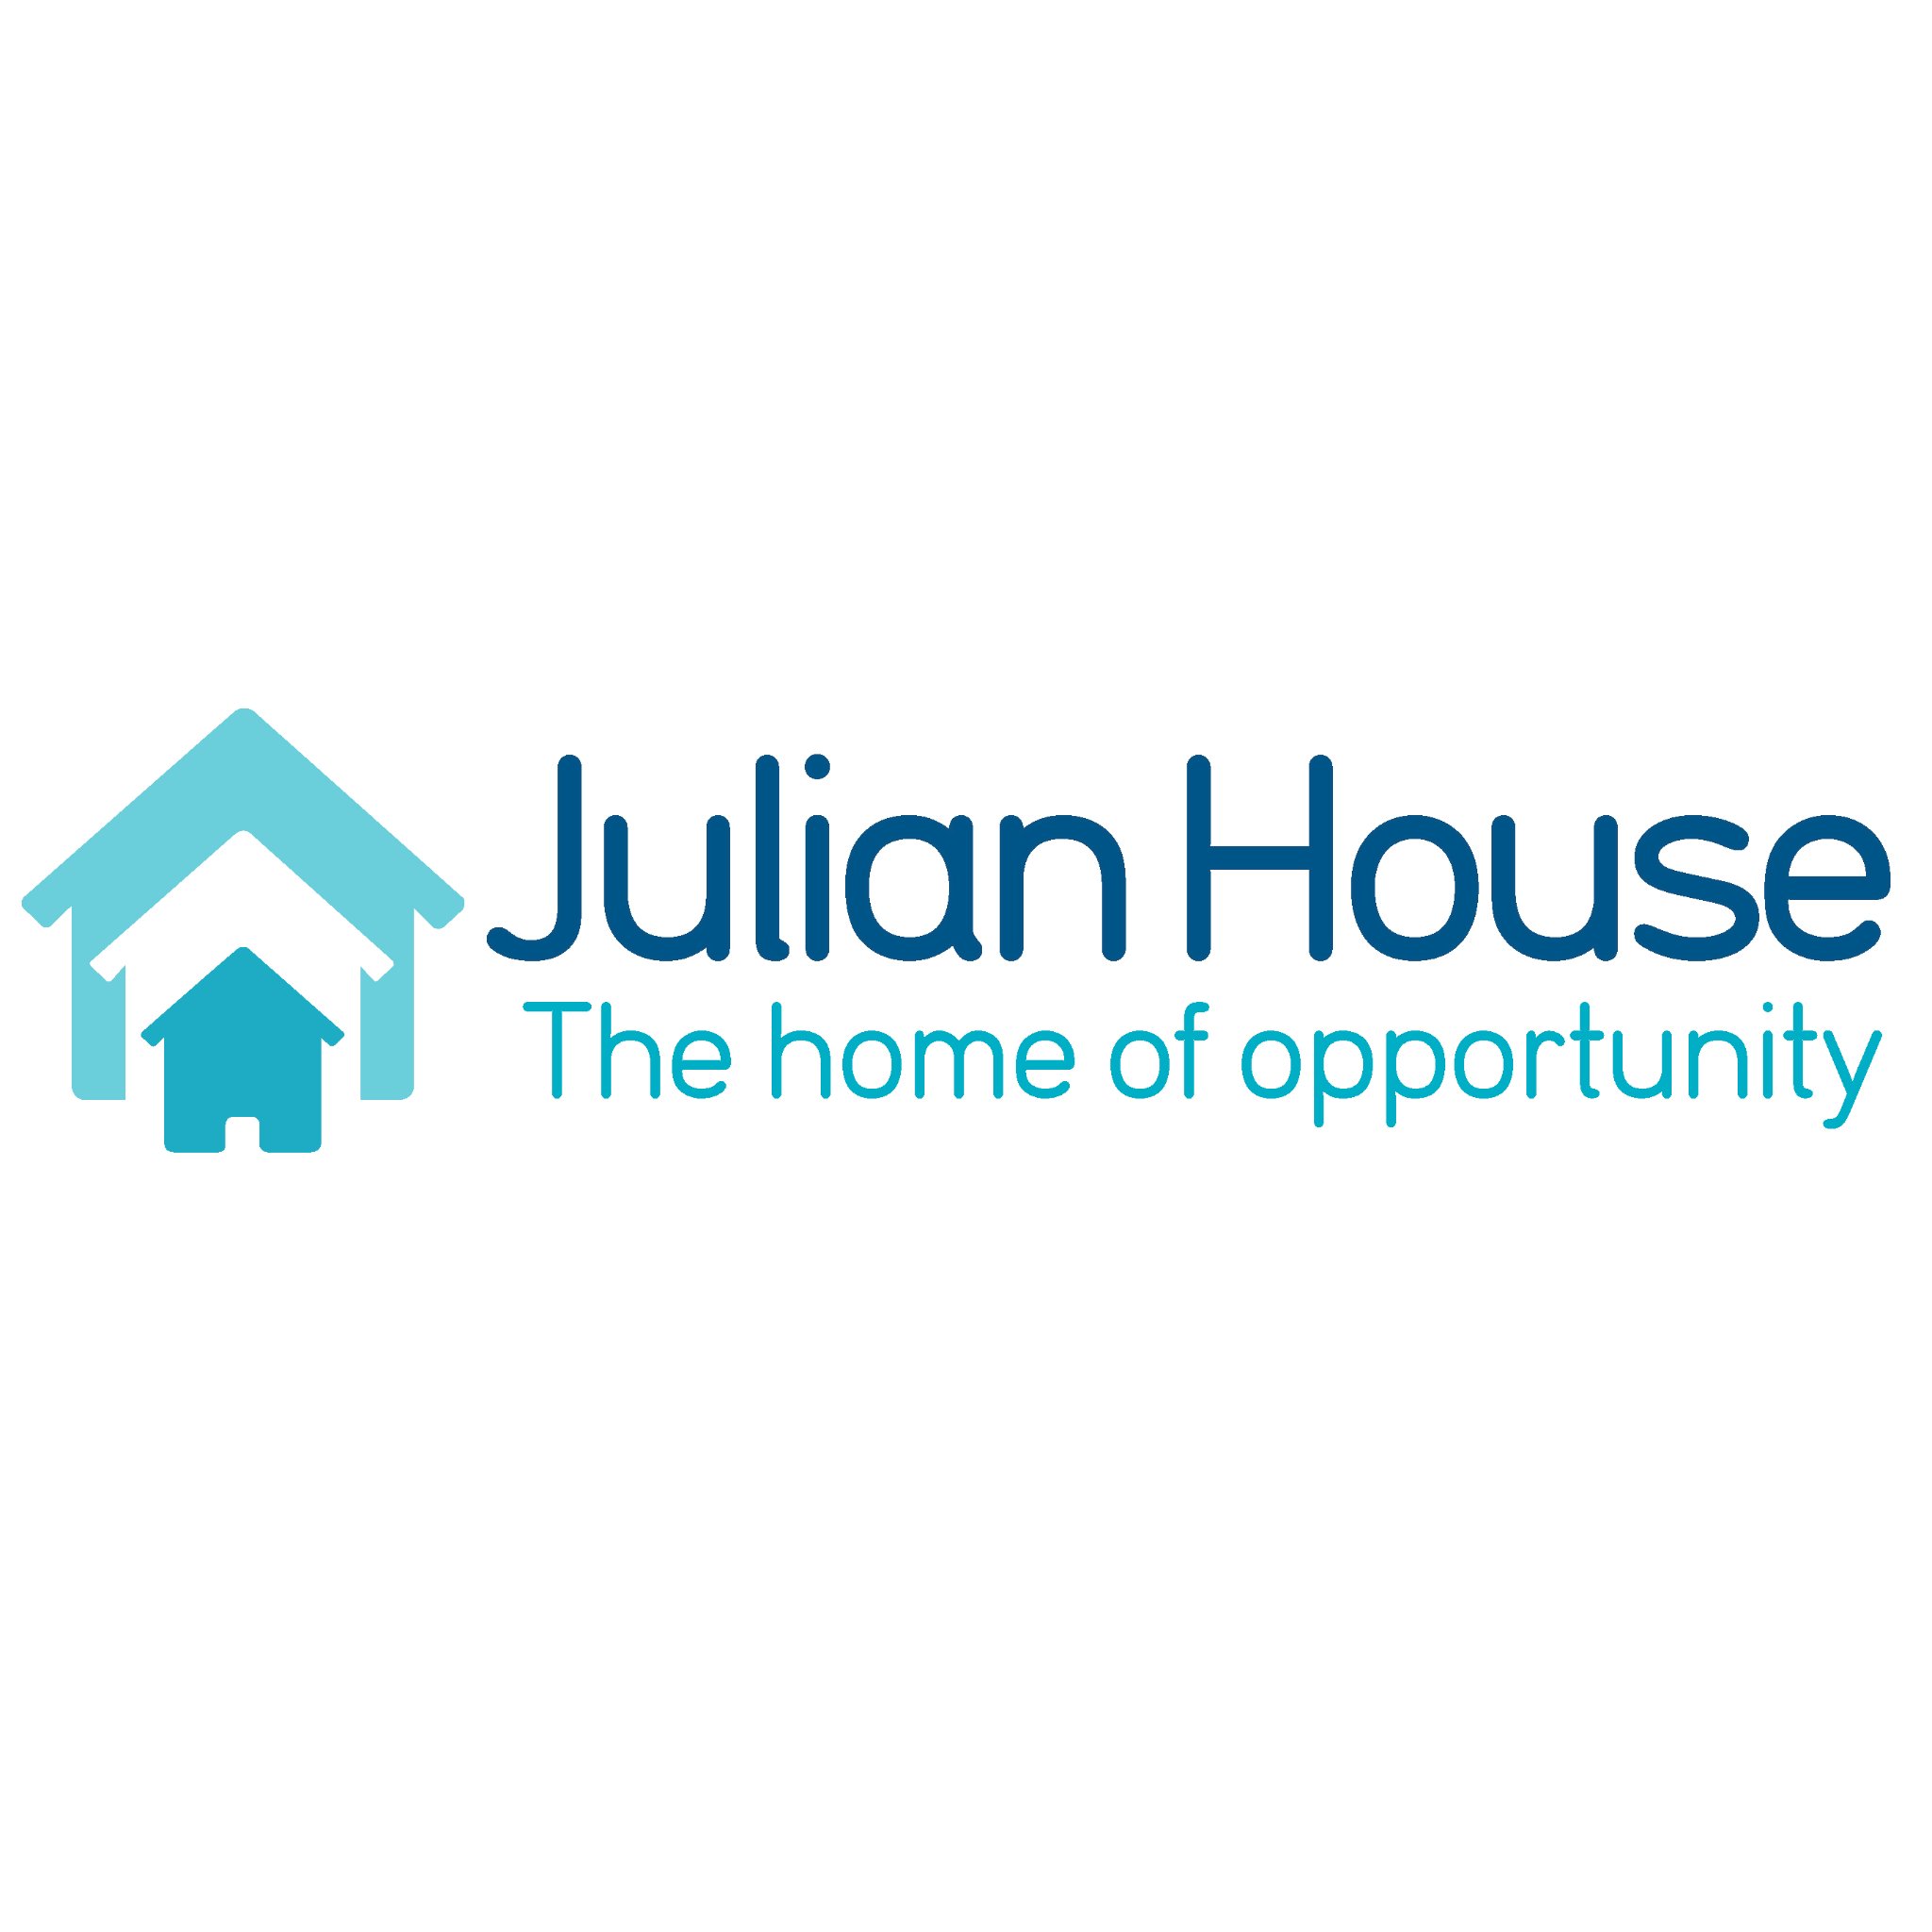 Julian House is a #charity running a #homeless outreach service in #Basingstoke & Deane.